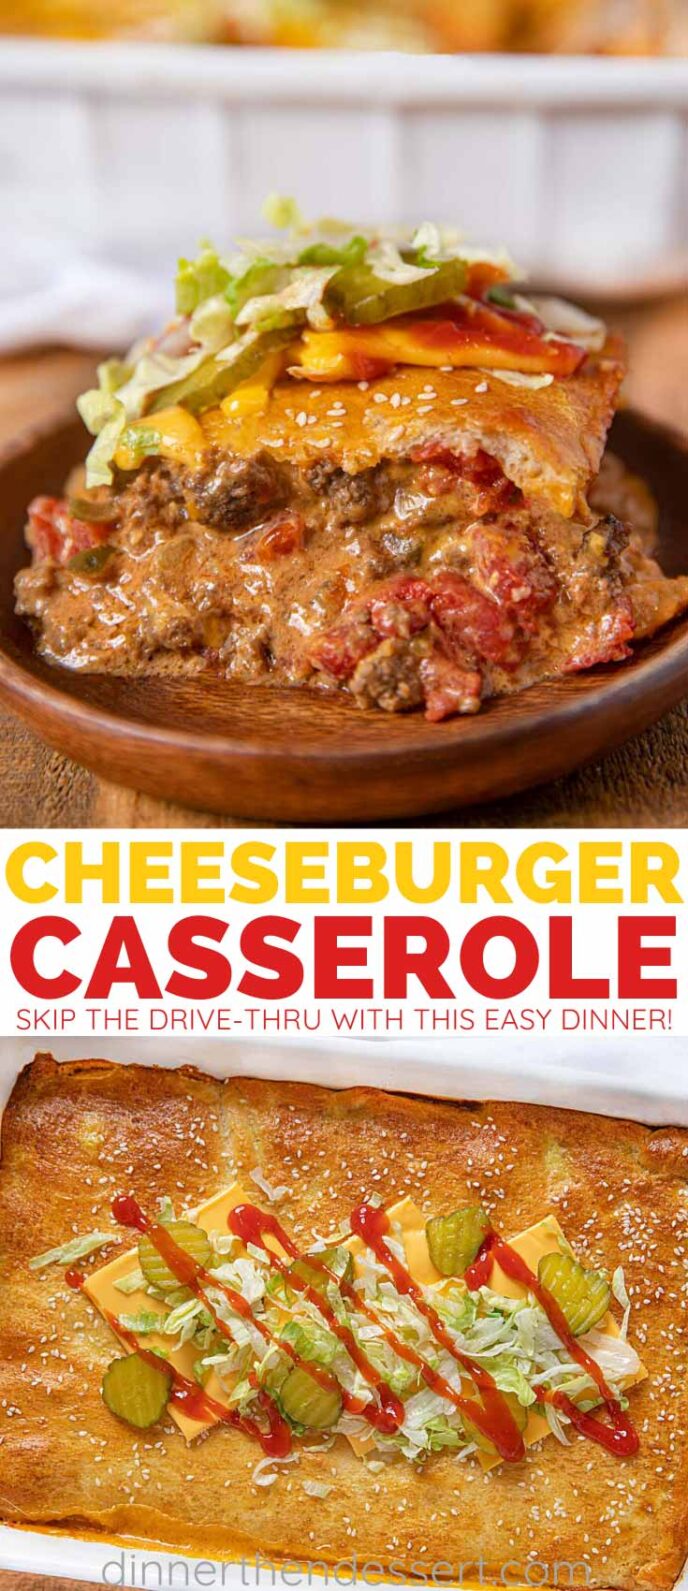 Cheeseburger Casserole collage